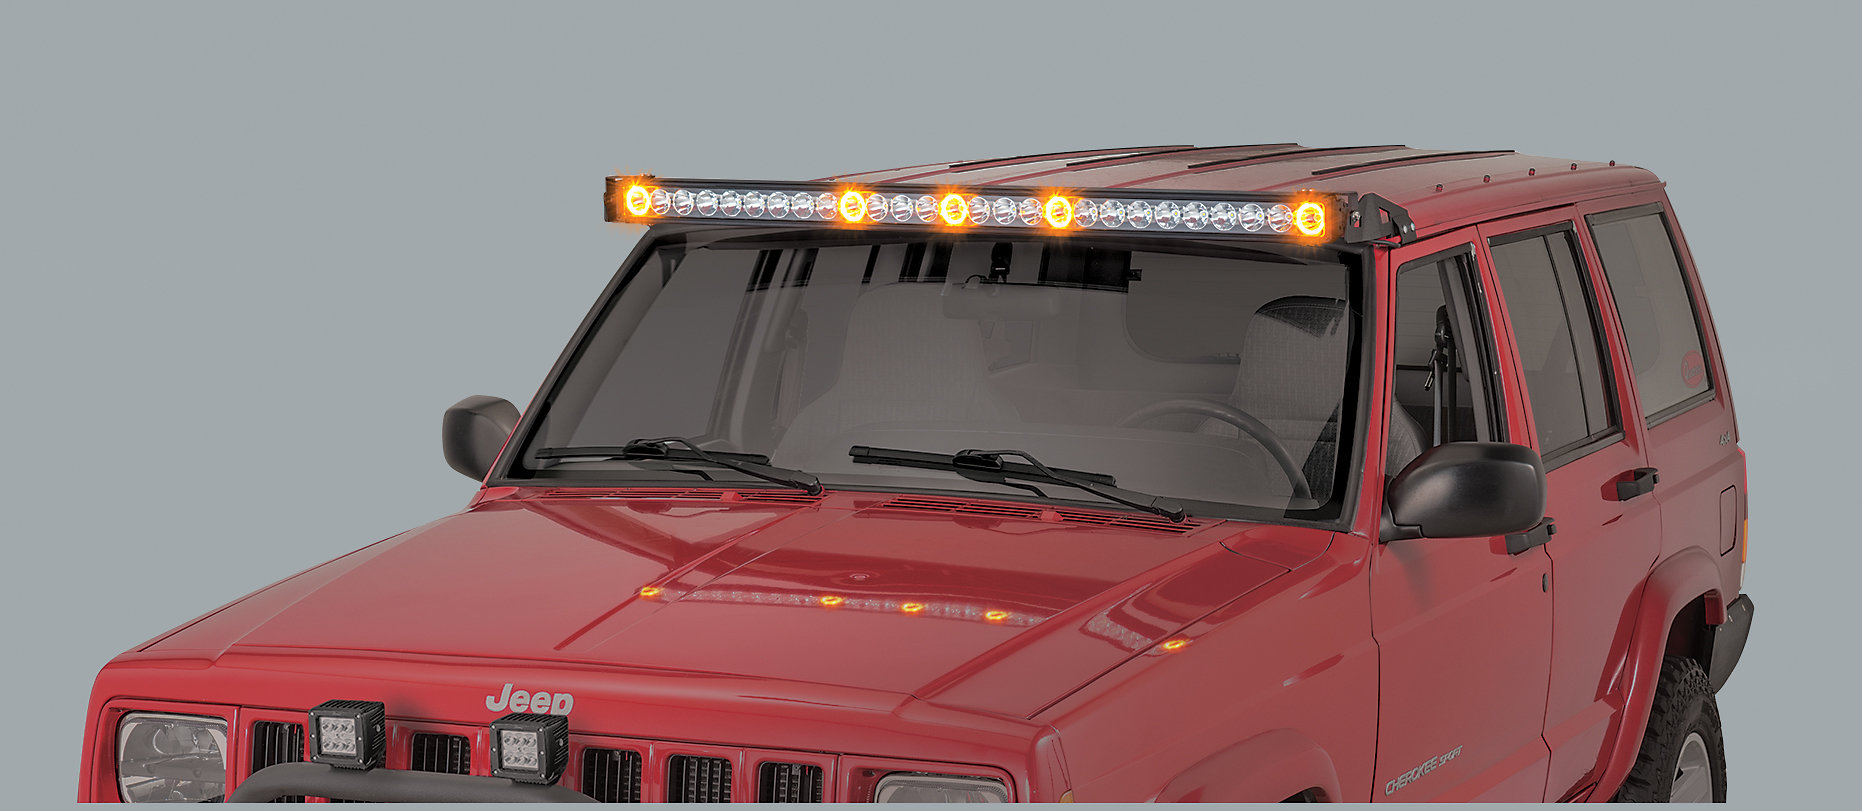 Quadratec J5 LED Light Bar Kit with Windshield Mounting Brackets for 84-01 Jeep  Cherokee XJ | Quadratec